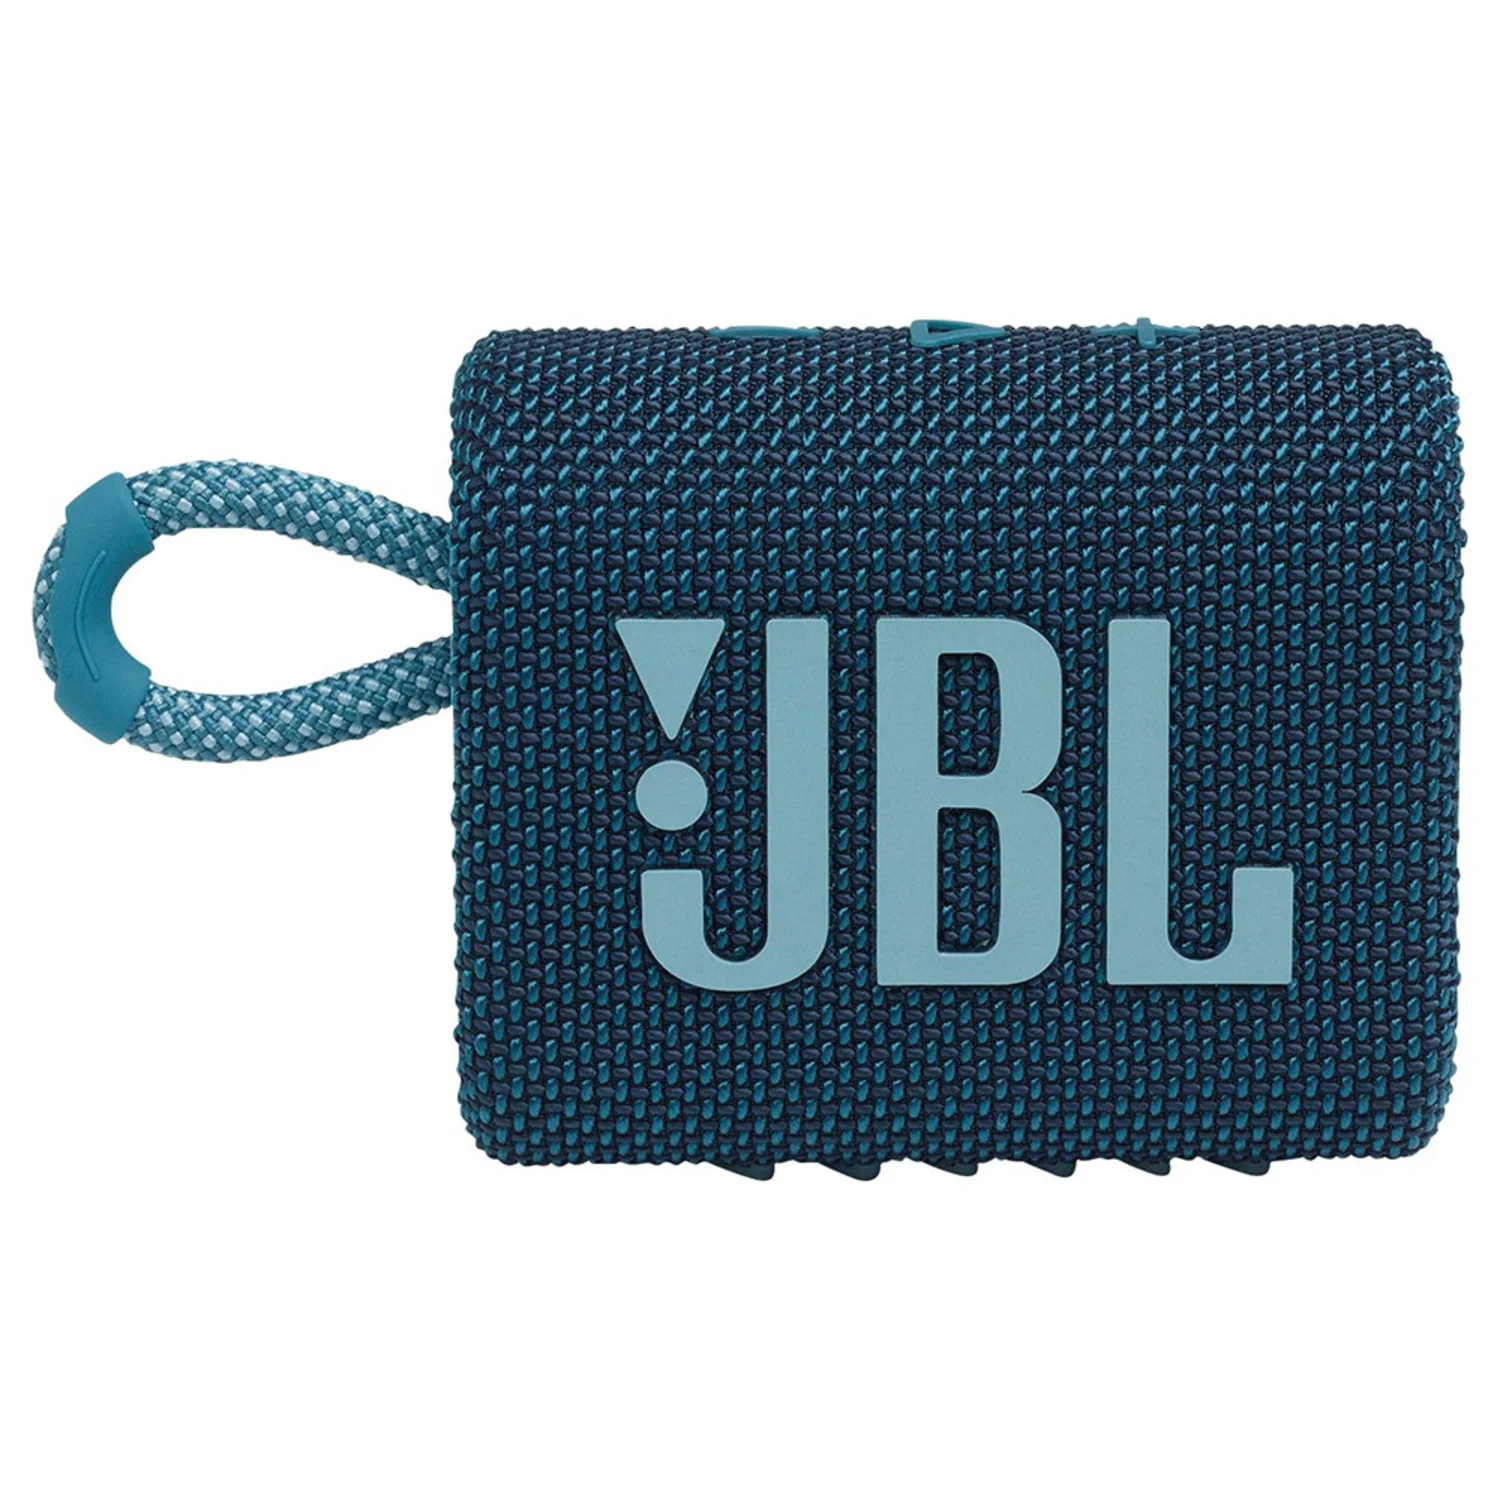 Caixa de som JBL GO 3 - Azul